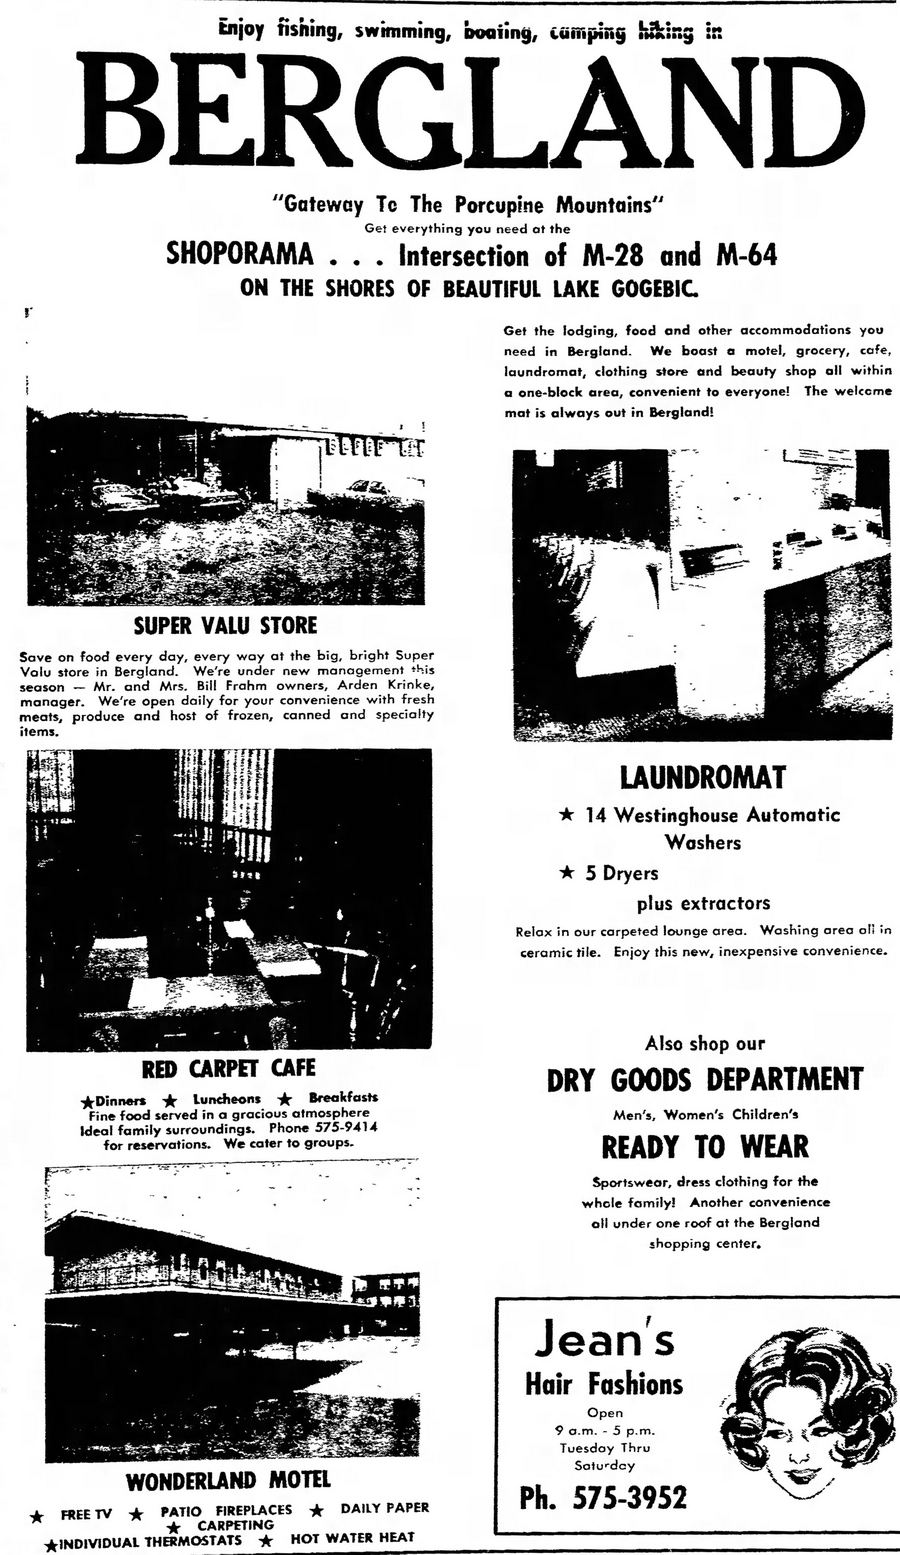 Lake Gogebic Motel (Wonderland Motel) - June 30 1970 Full Page Ad On Bergland